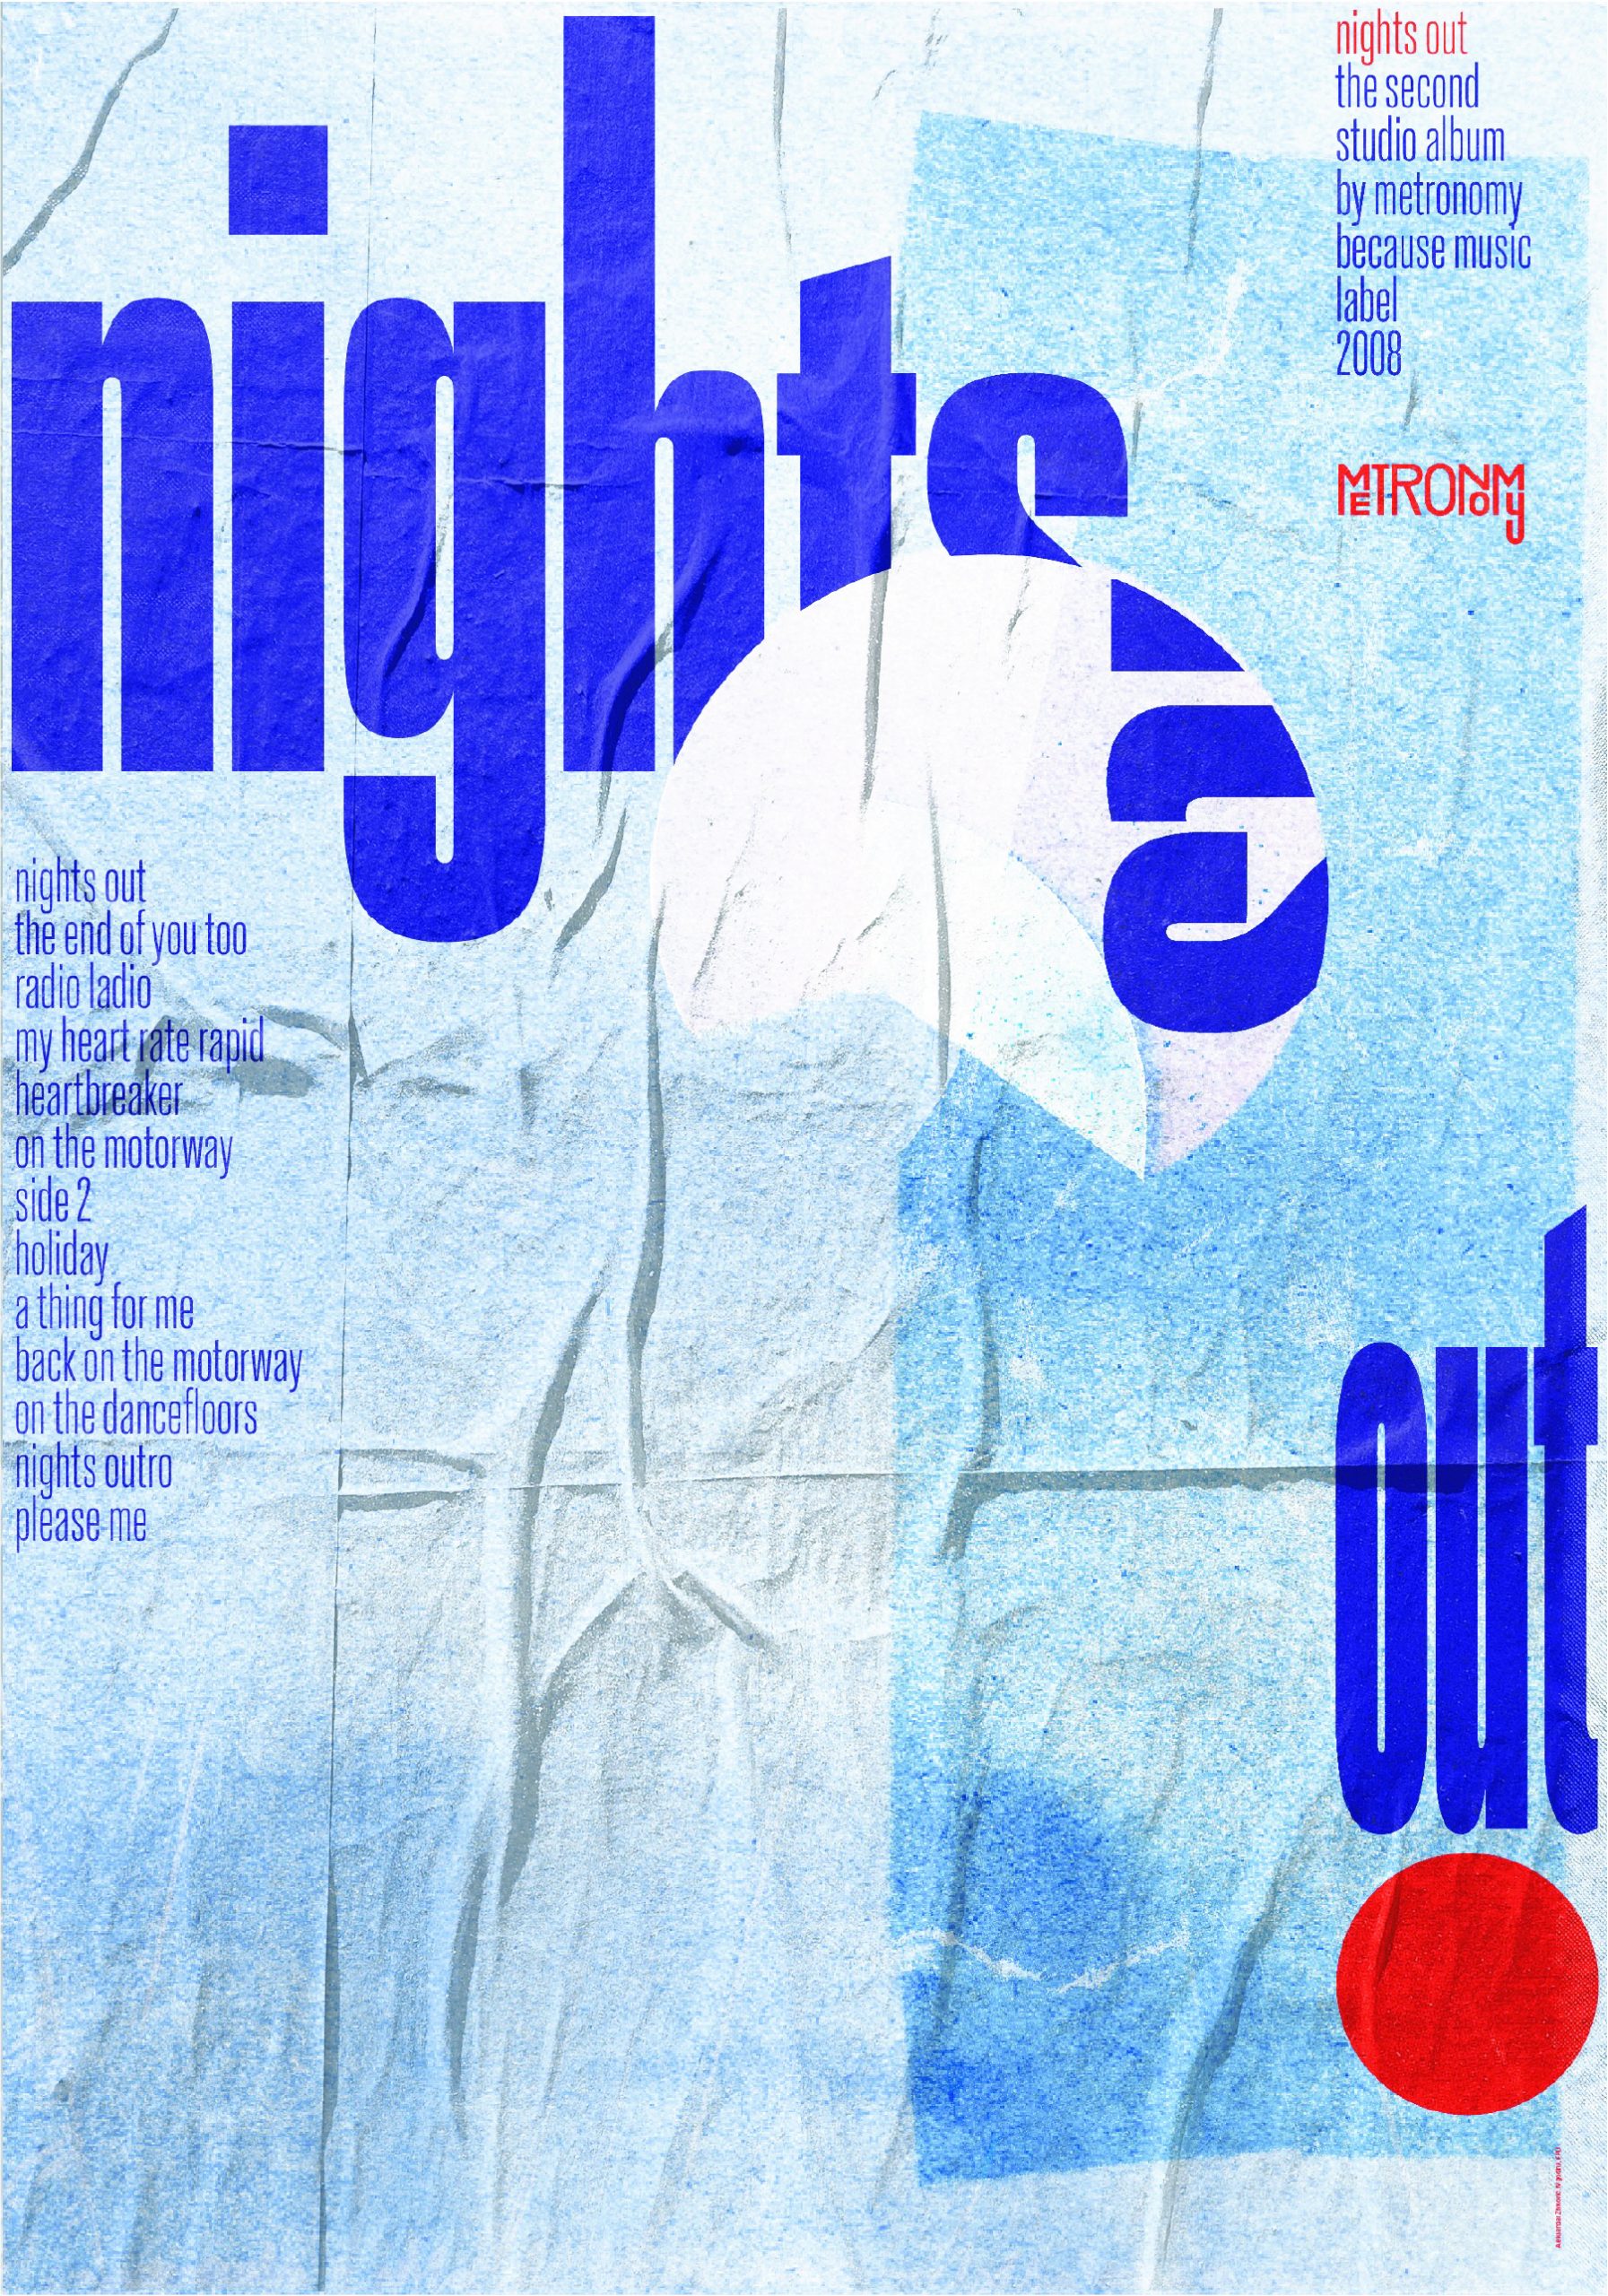 02 Aleksandar Zivkovic – Plakat Metronomy Nights out